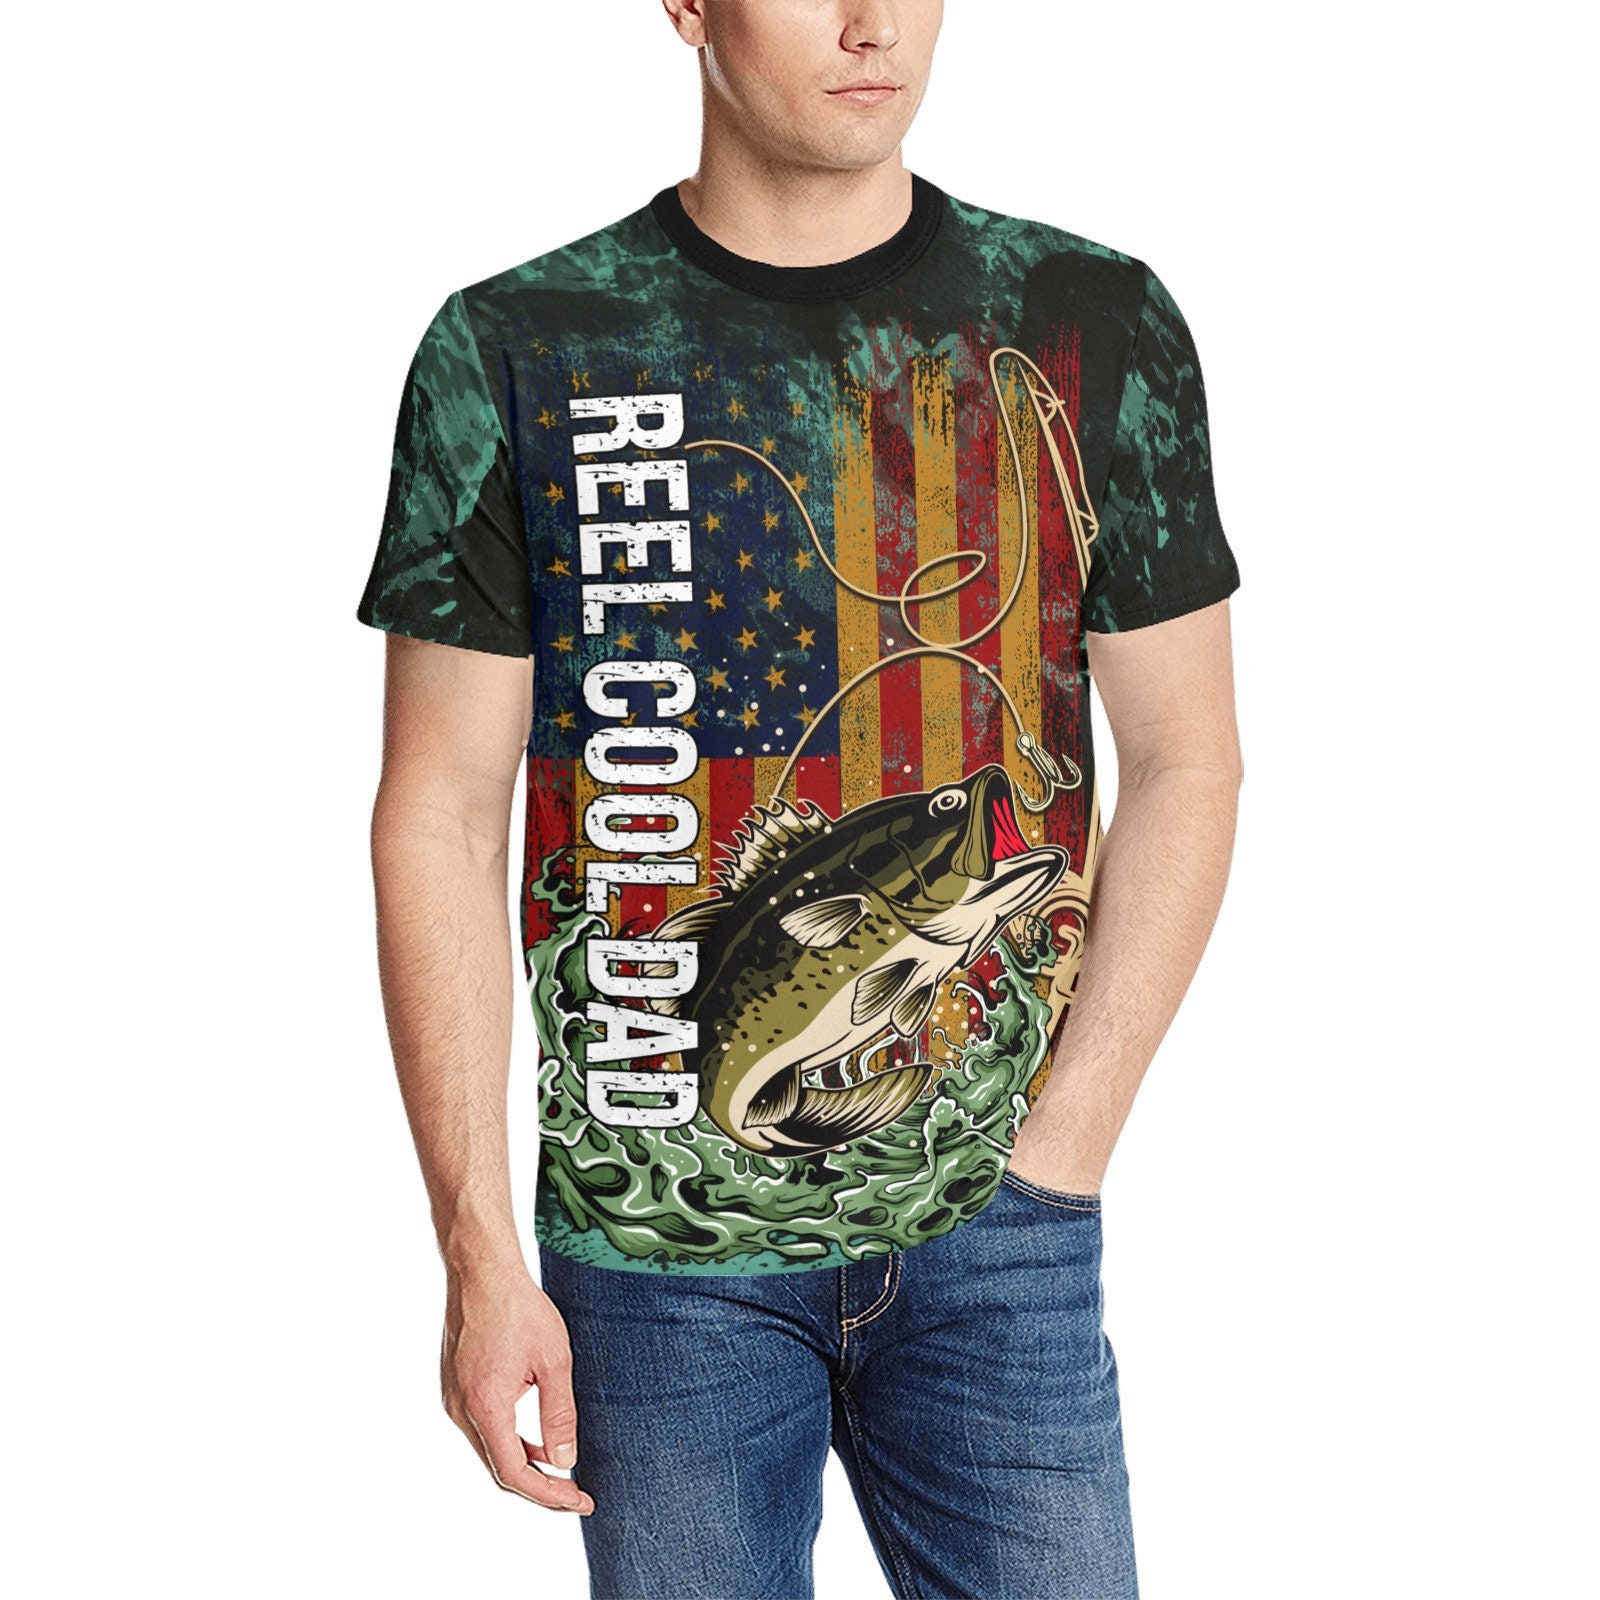 Mens Fishing Graphic Tee - Reel Cool Dad Shirt